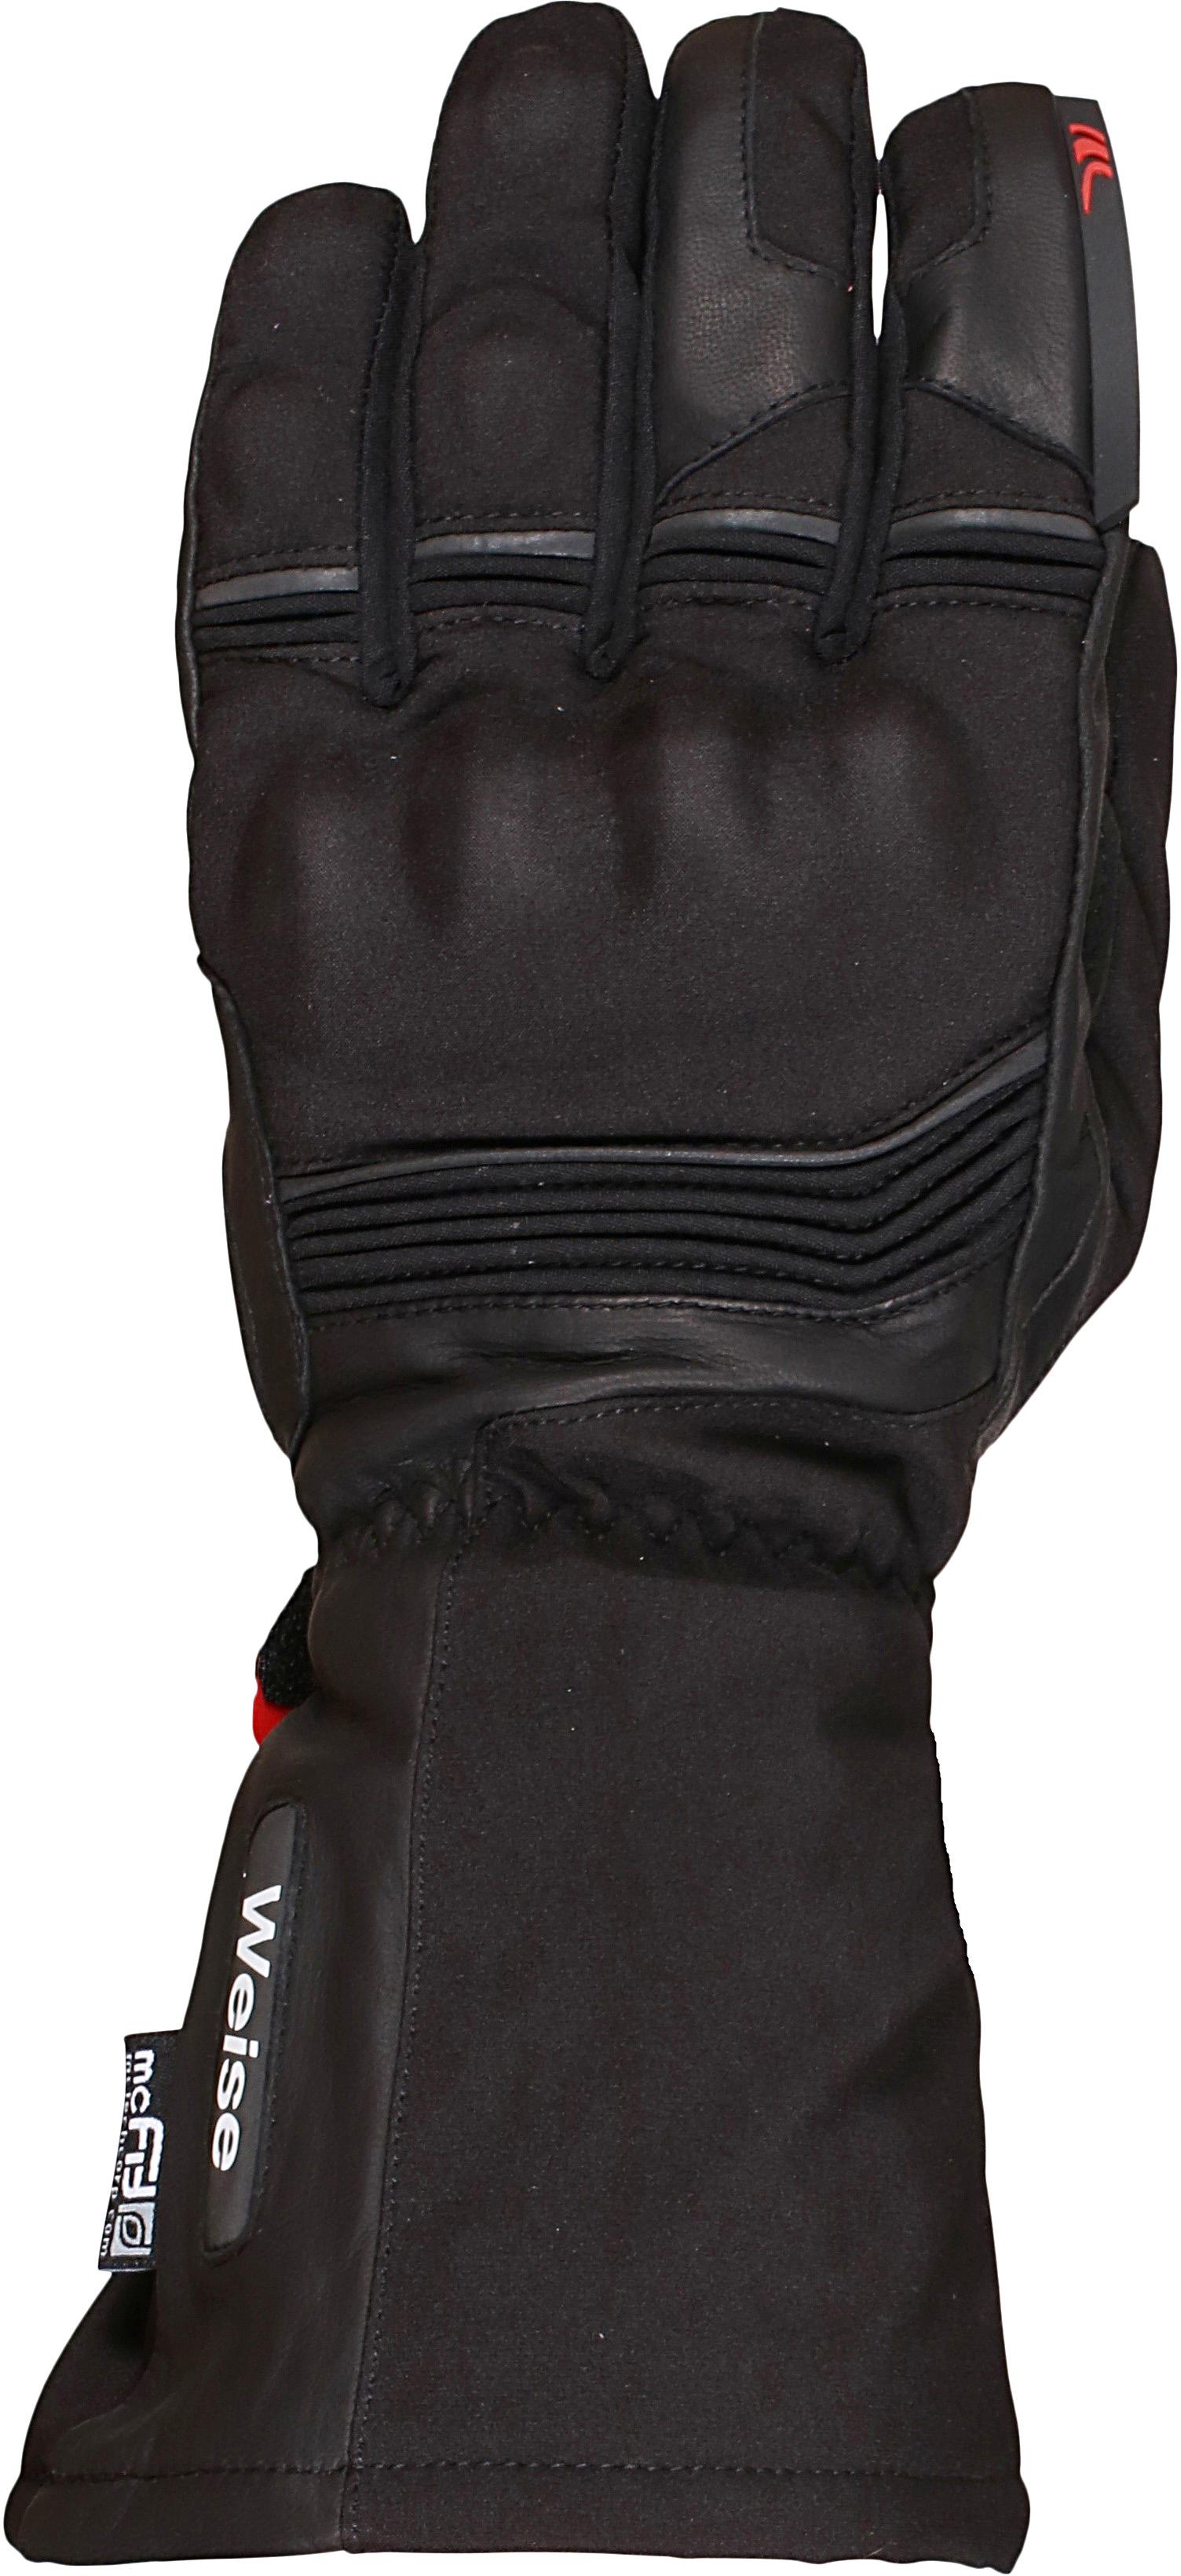 Weise Montana 150 Motorcycle Gloves - Black, Xl